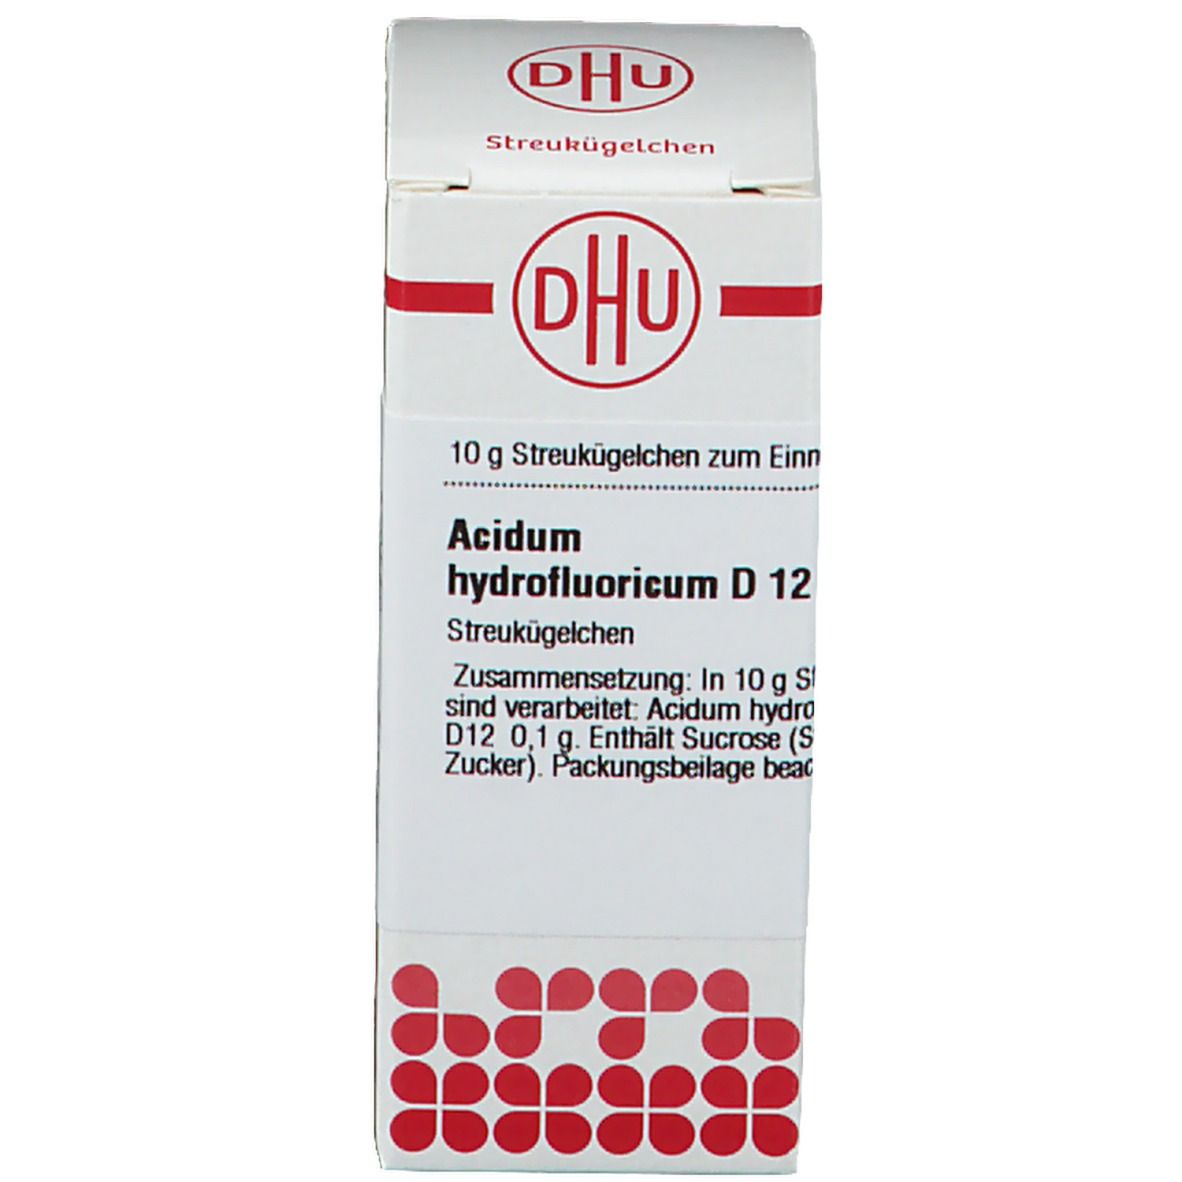 DHU Acidum Hydrofluor D12